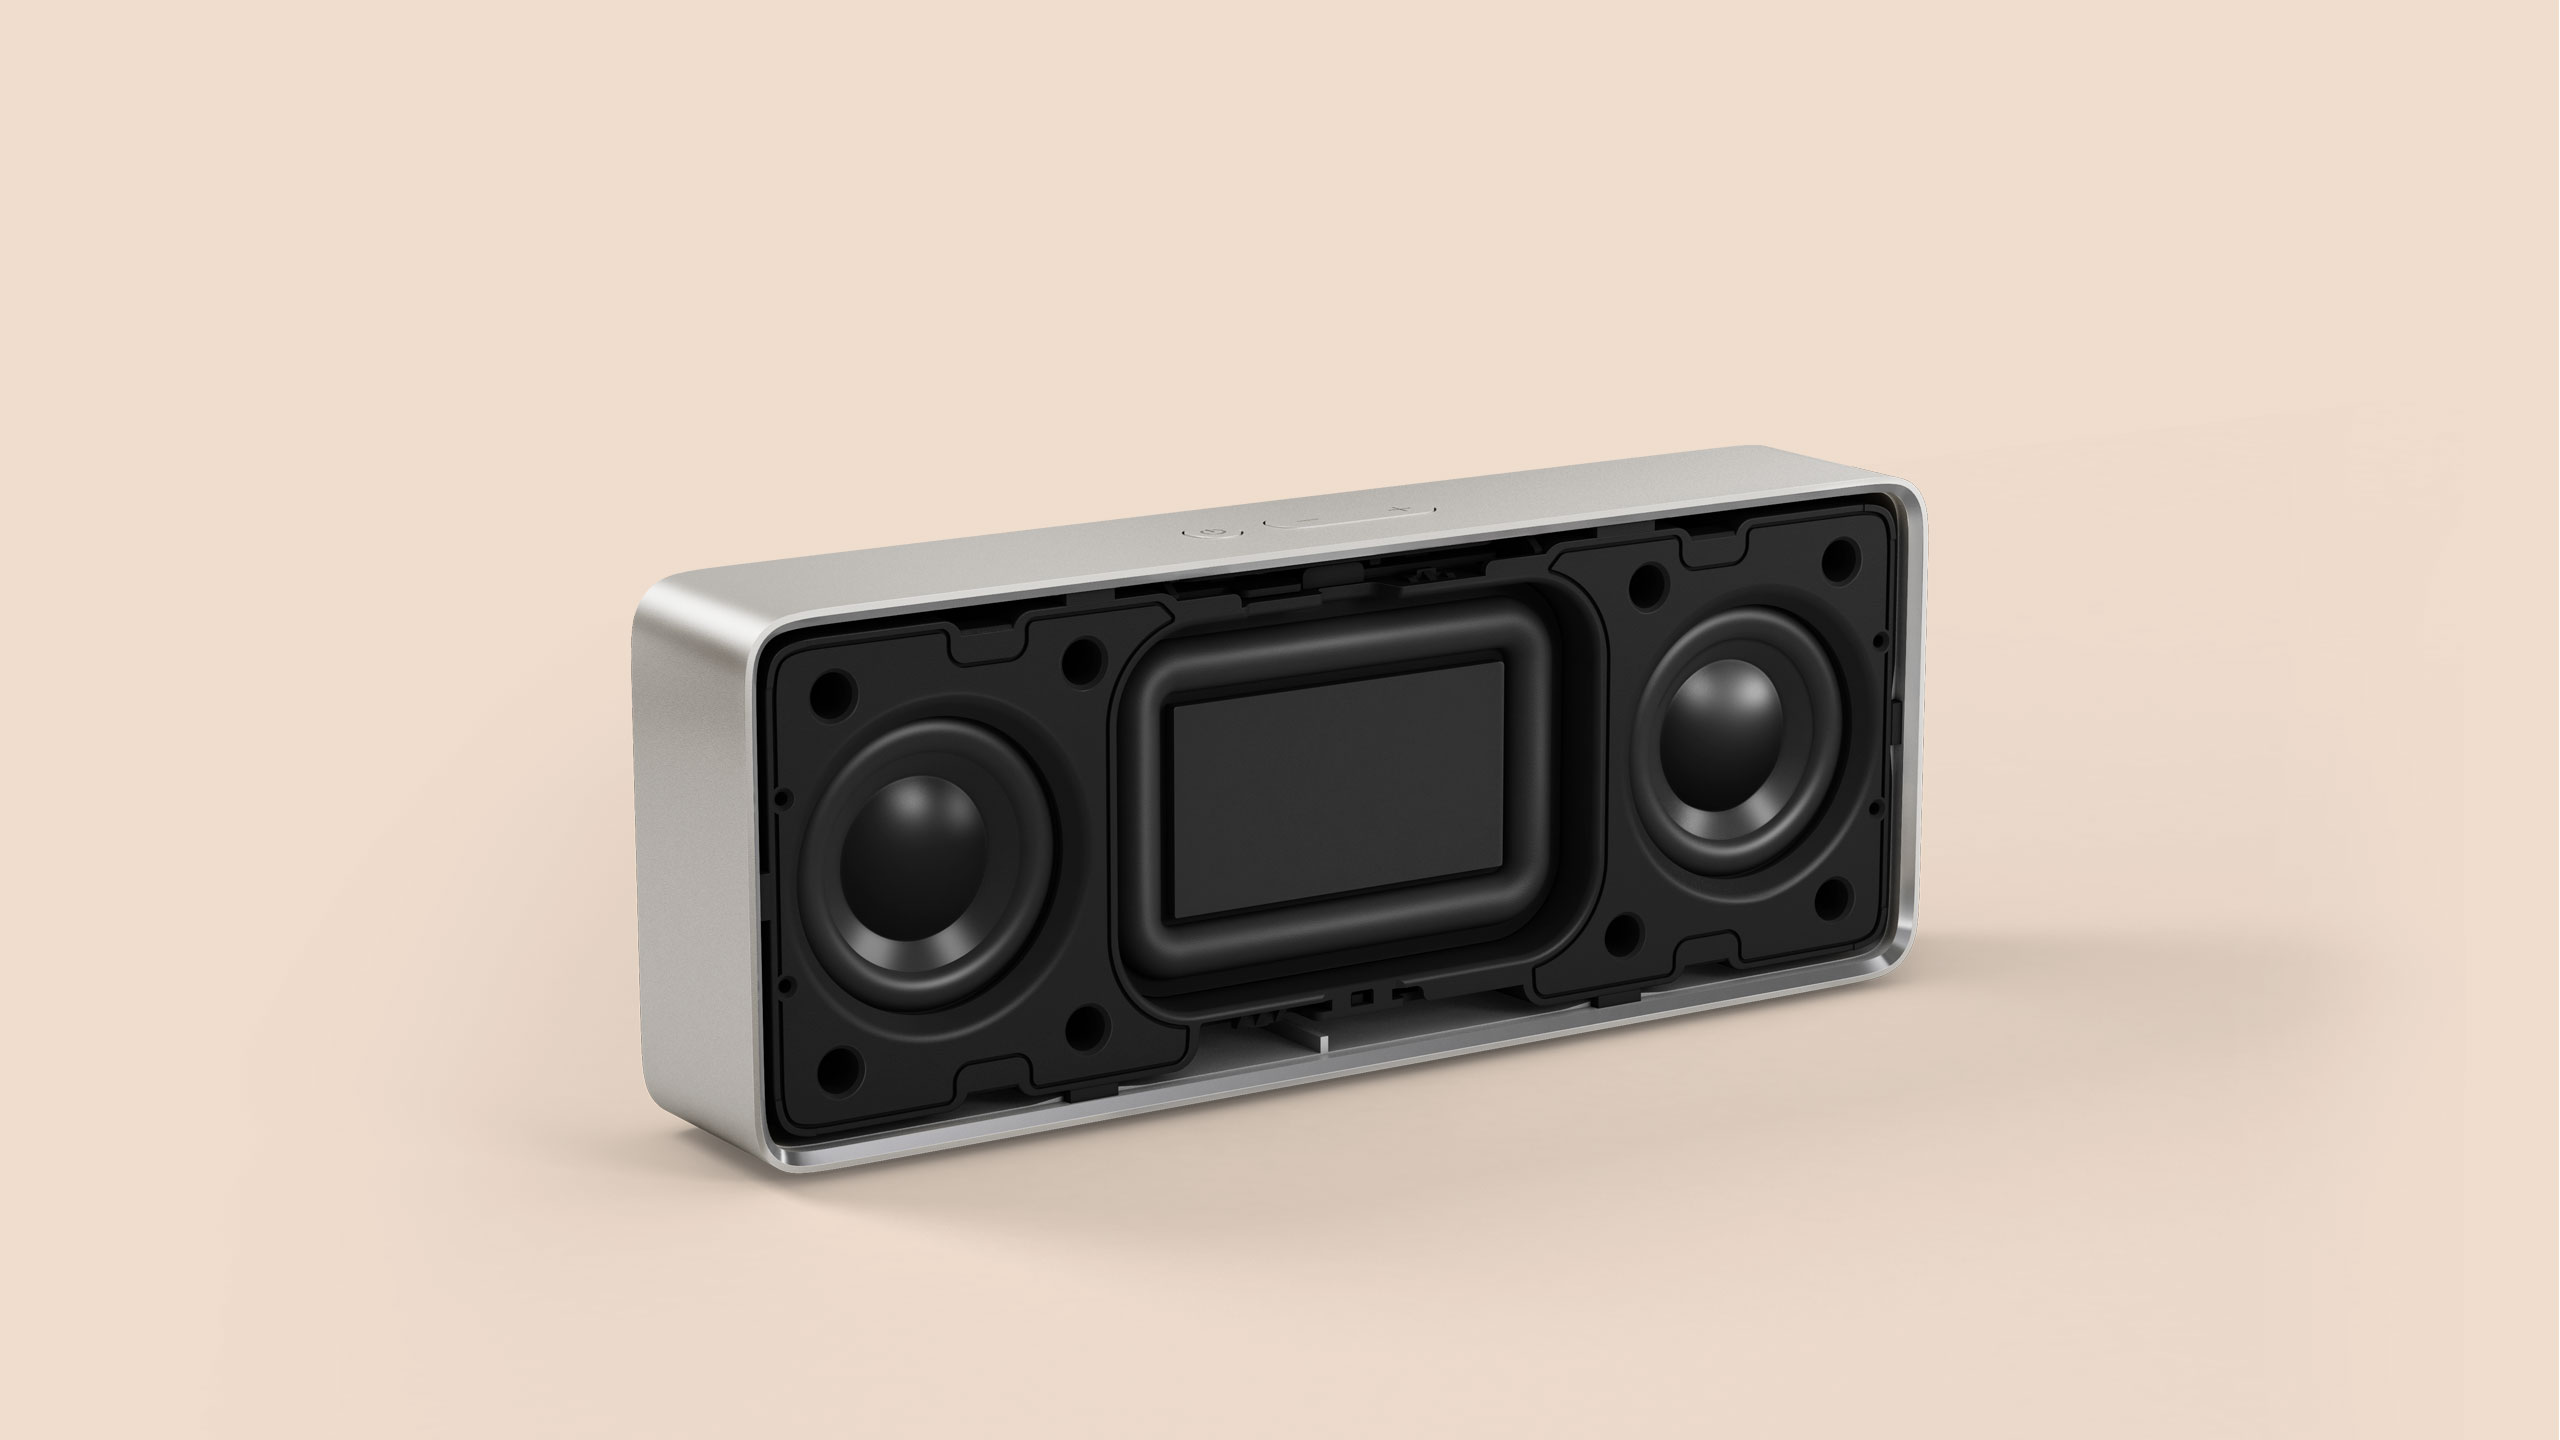 mi basic 2 bluetooth speaker review